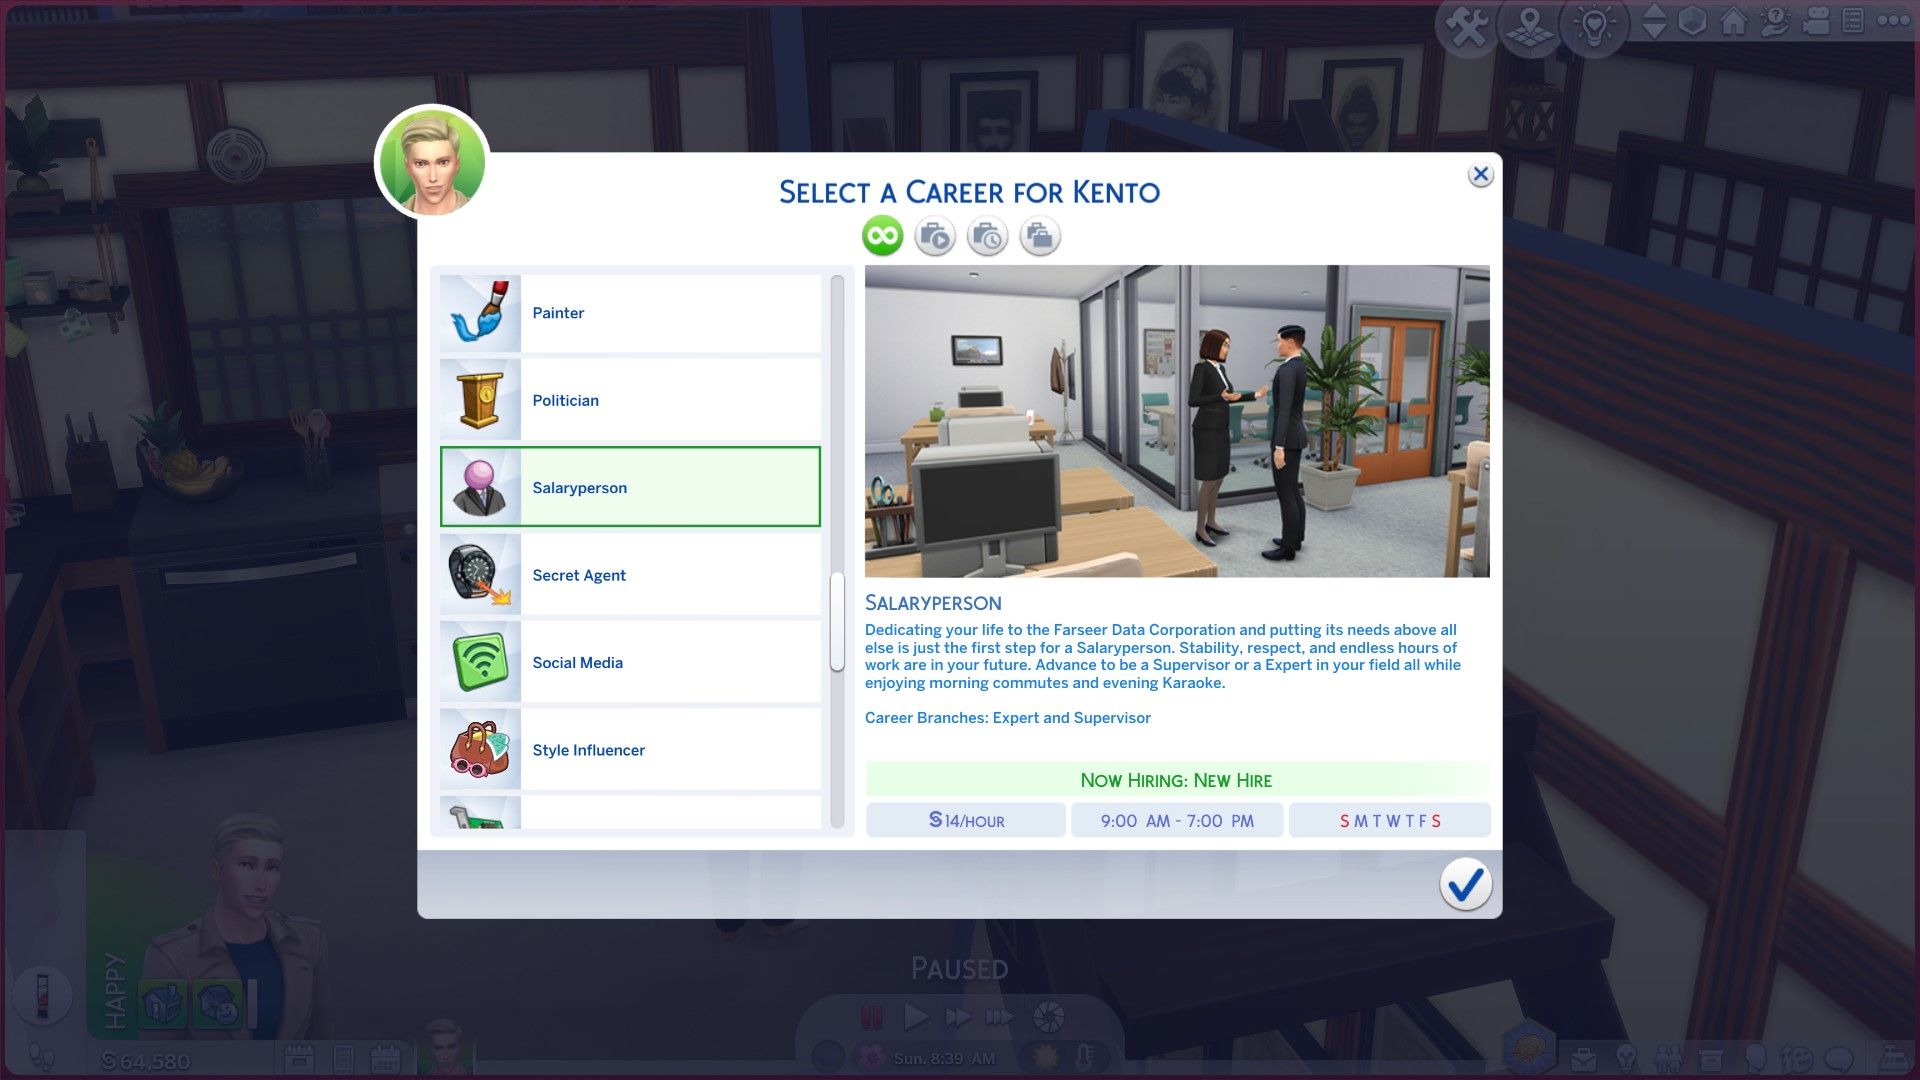 The Sims 4: Снимок экрана меню выбора карьеры с подсветкой карьеры 'Бюрократ'